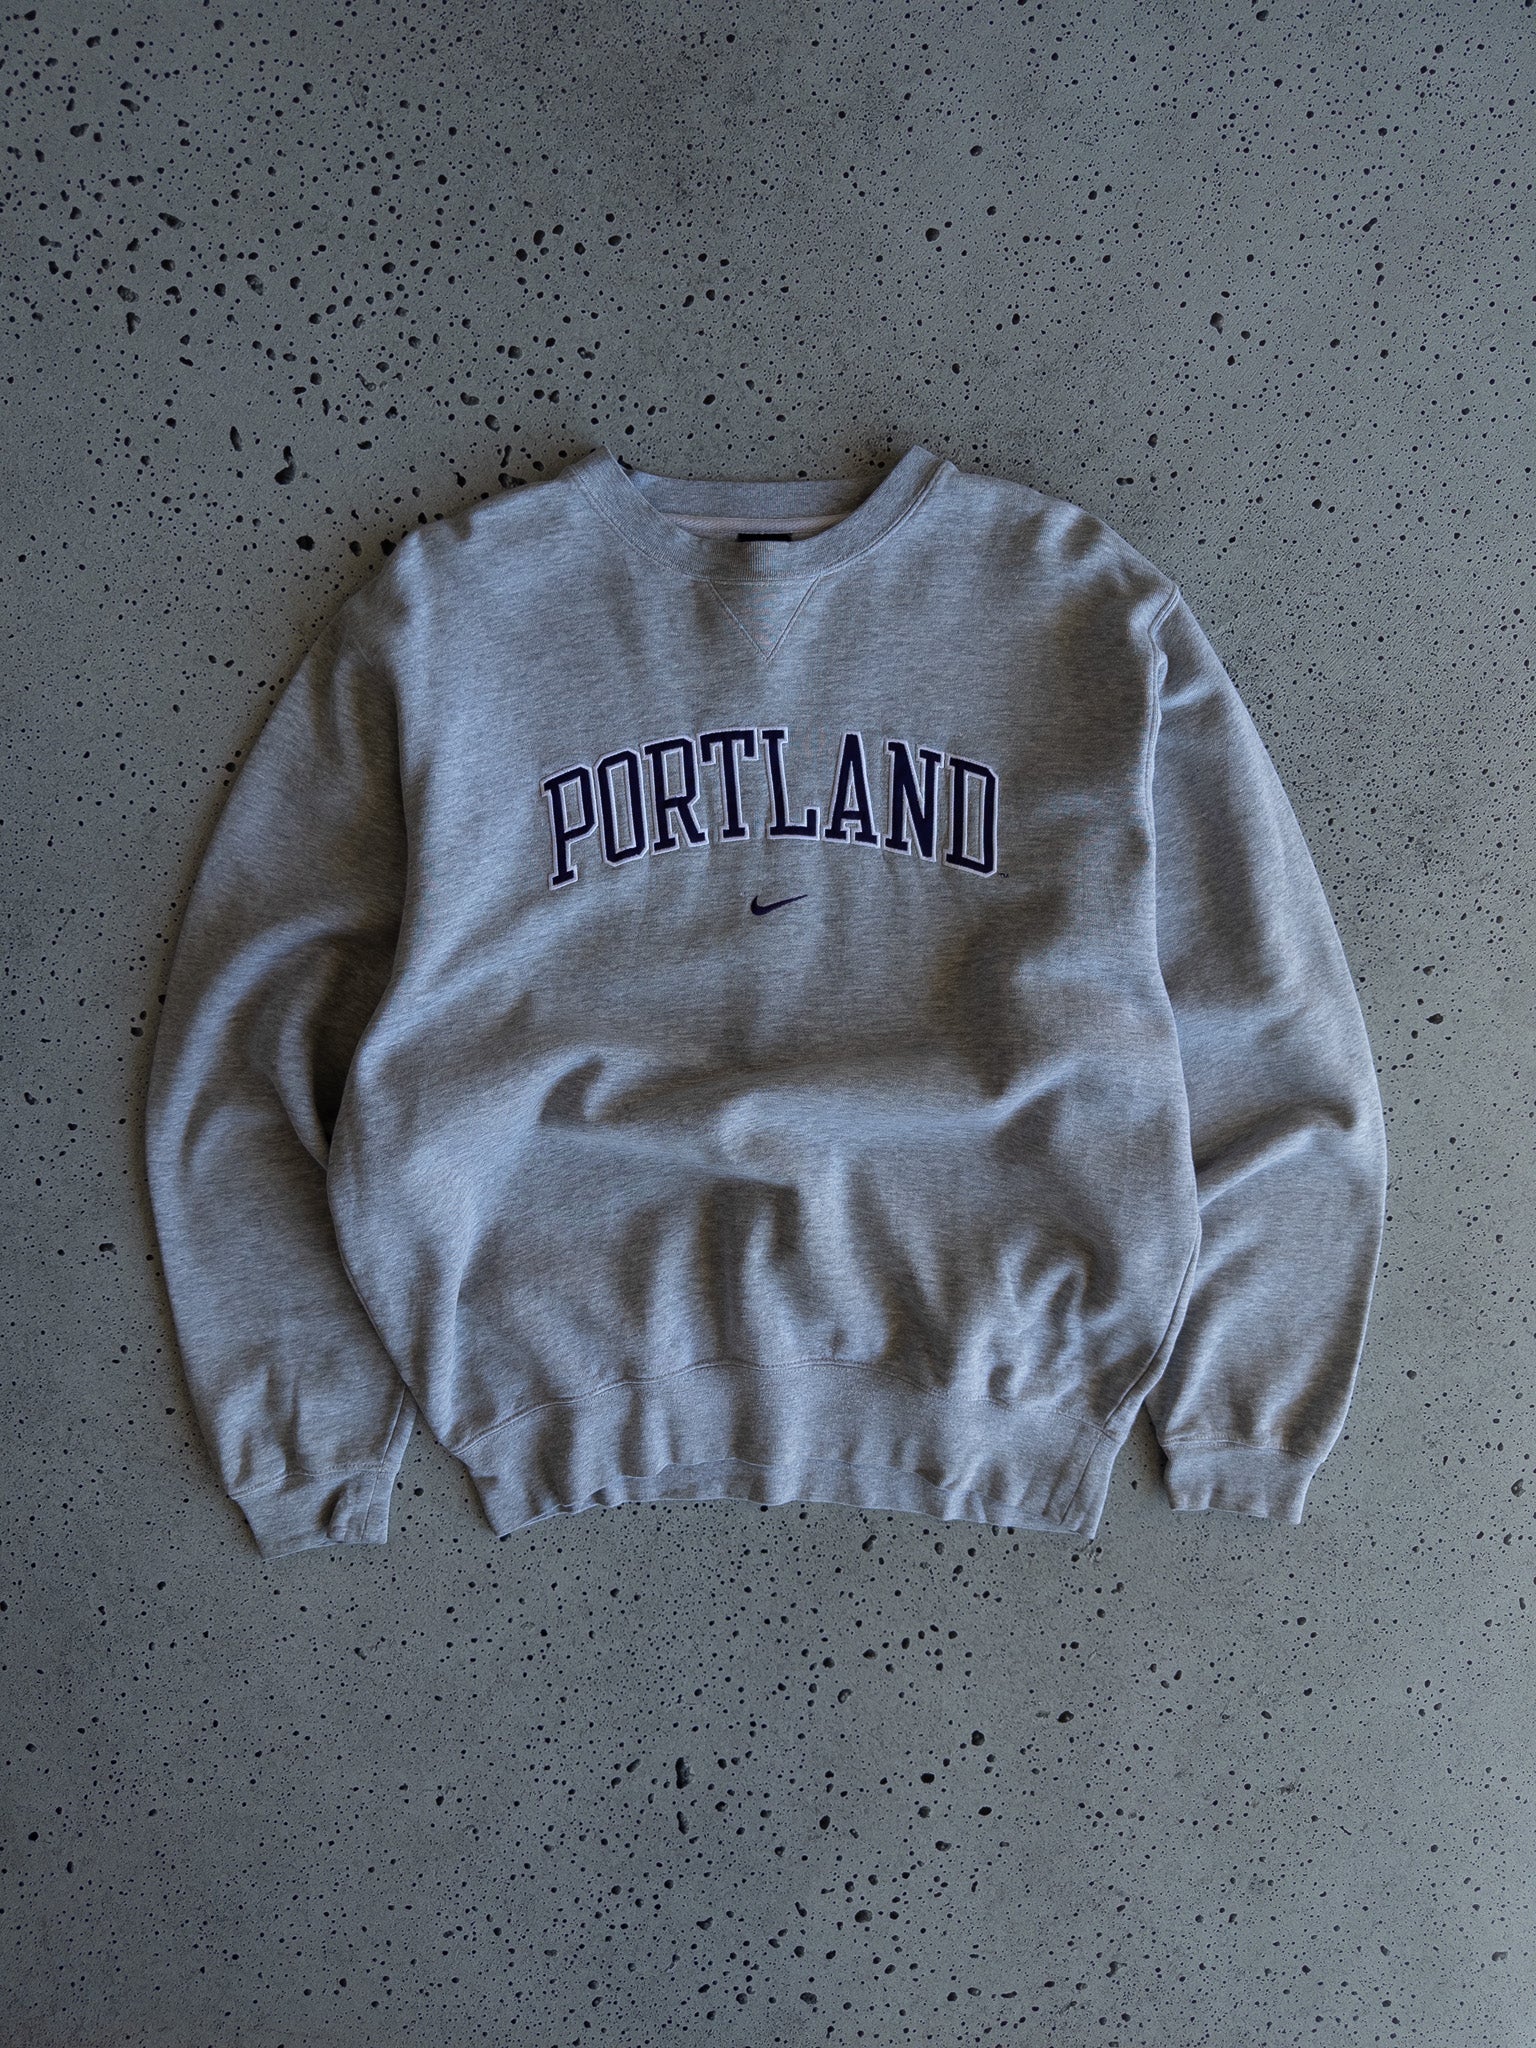 Vintage Portland Nike Sweatshirt (L)